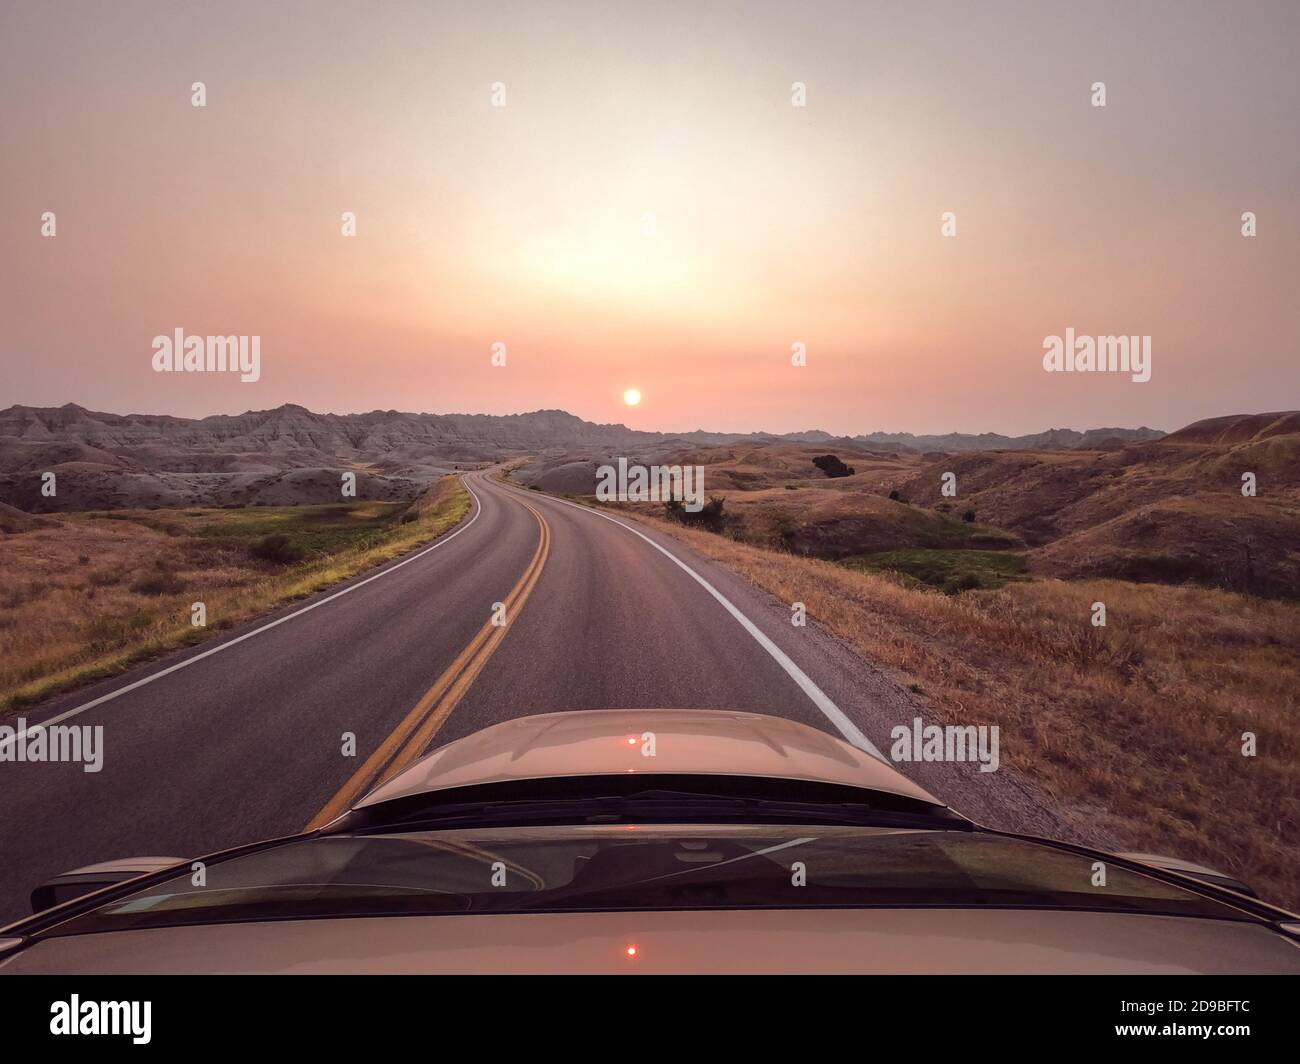 Car driving along road at sunset during wildfires, Badlands National Park, South Dakota, USA Stock Photo